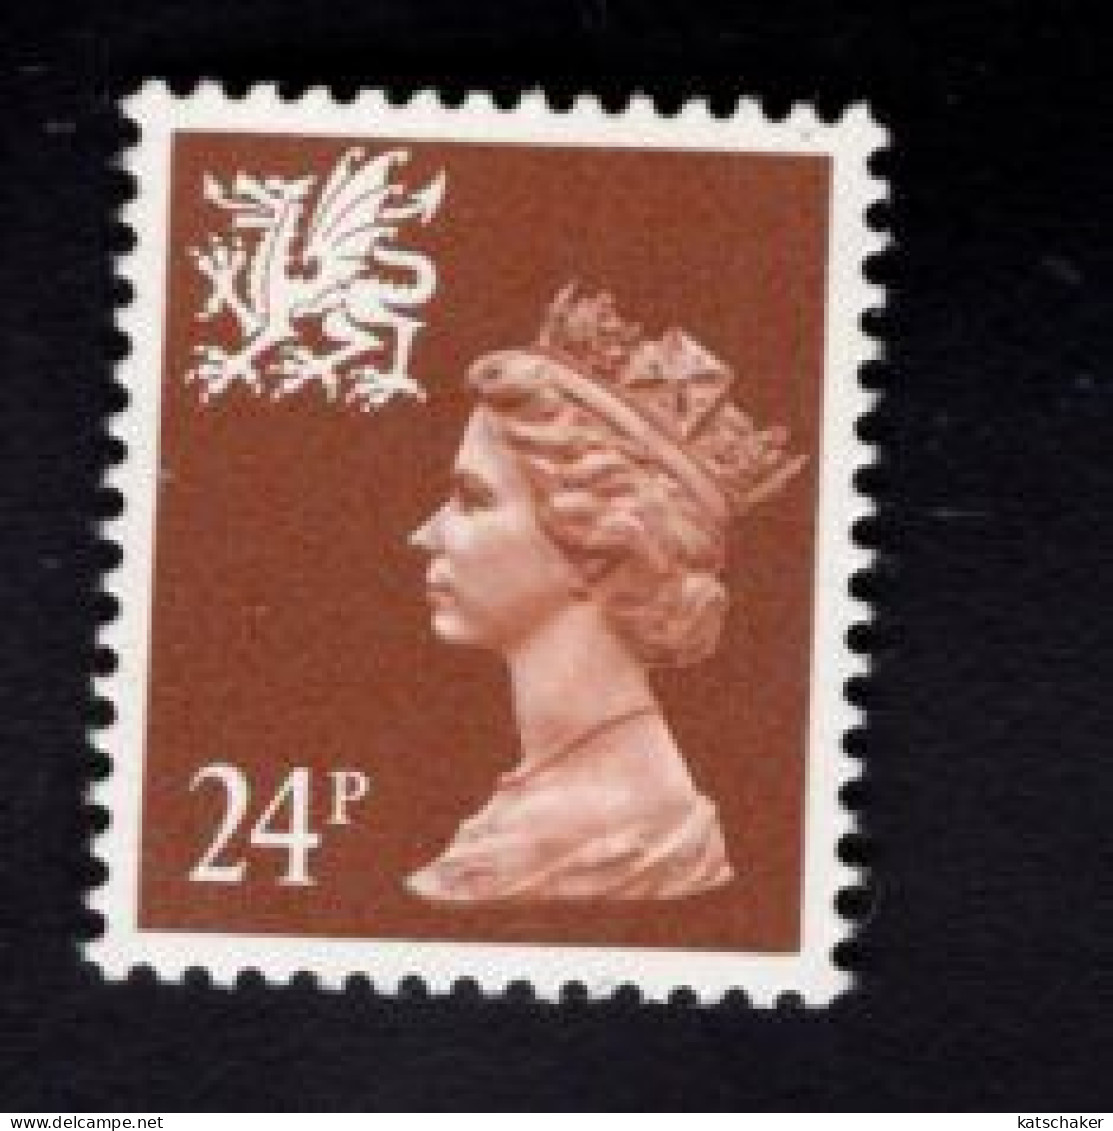 1899551493 1992  SCOTT WMMH45 GIBONS W59B  (XX) POSTFRIS MINT NEVER HINGED   - QUEEN ELIZABETH II - MONARCH - Wales